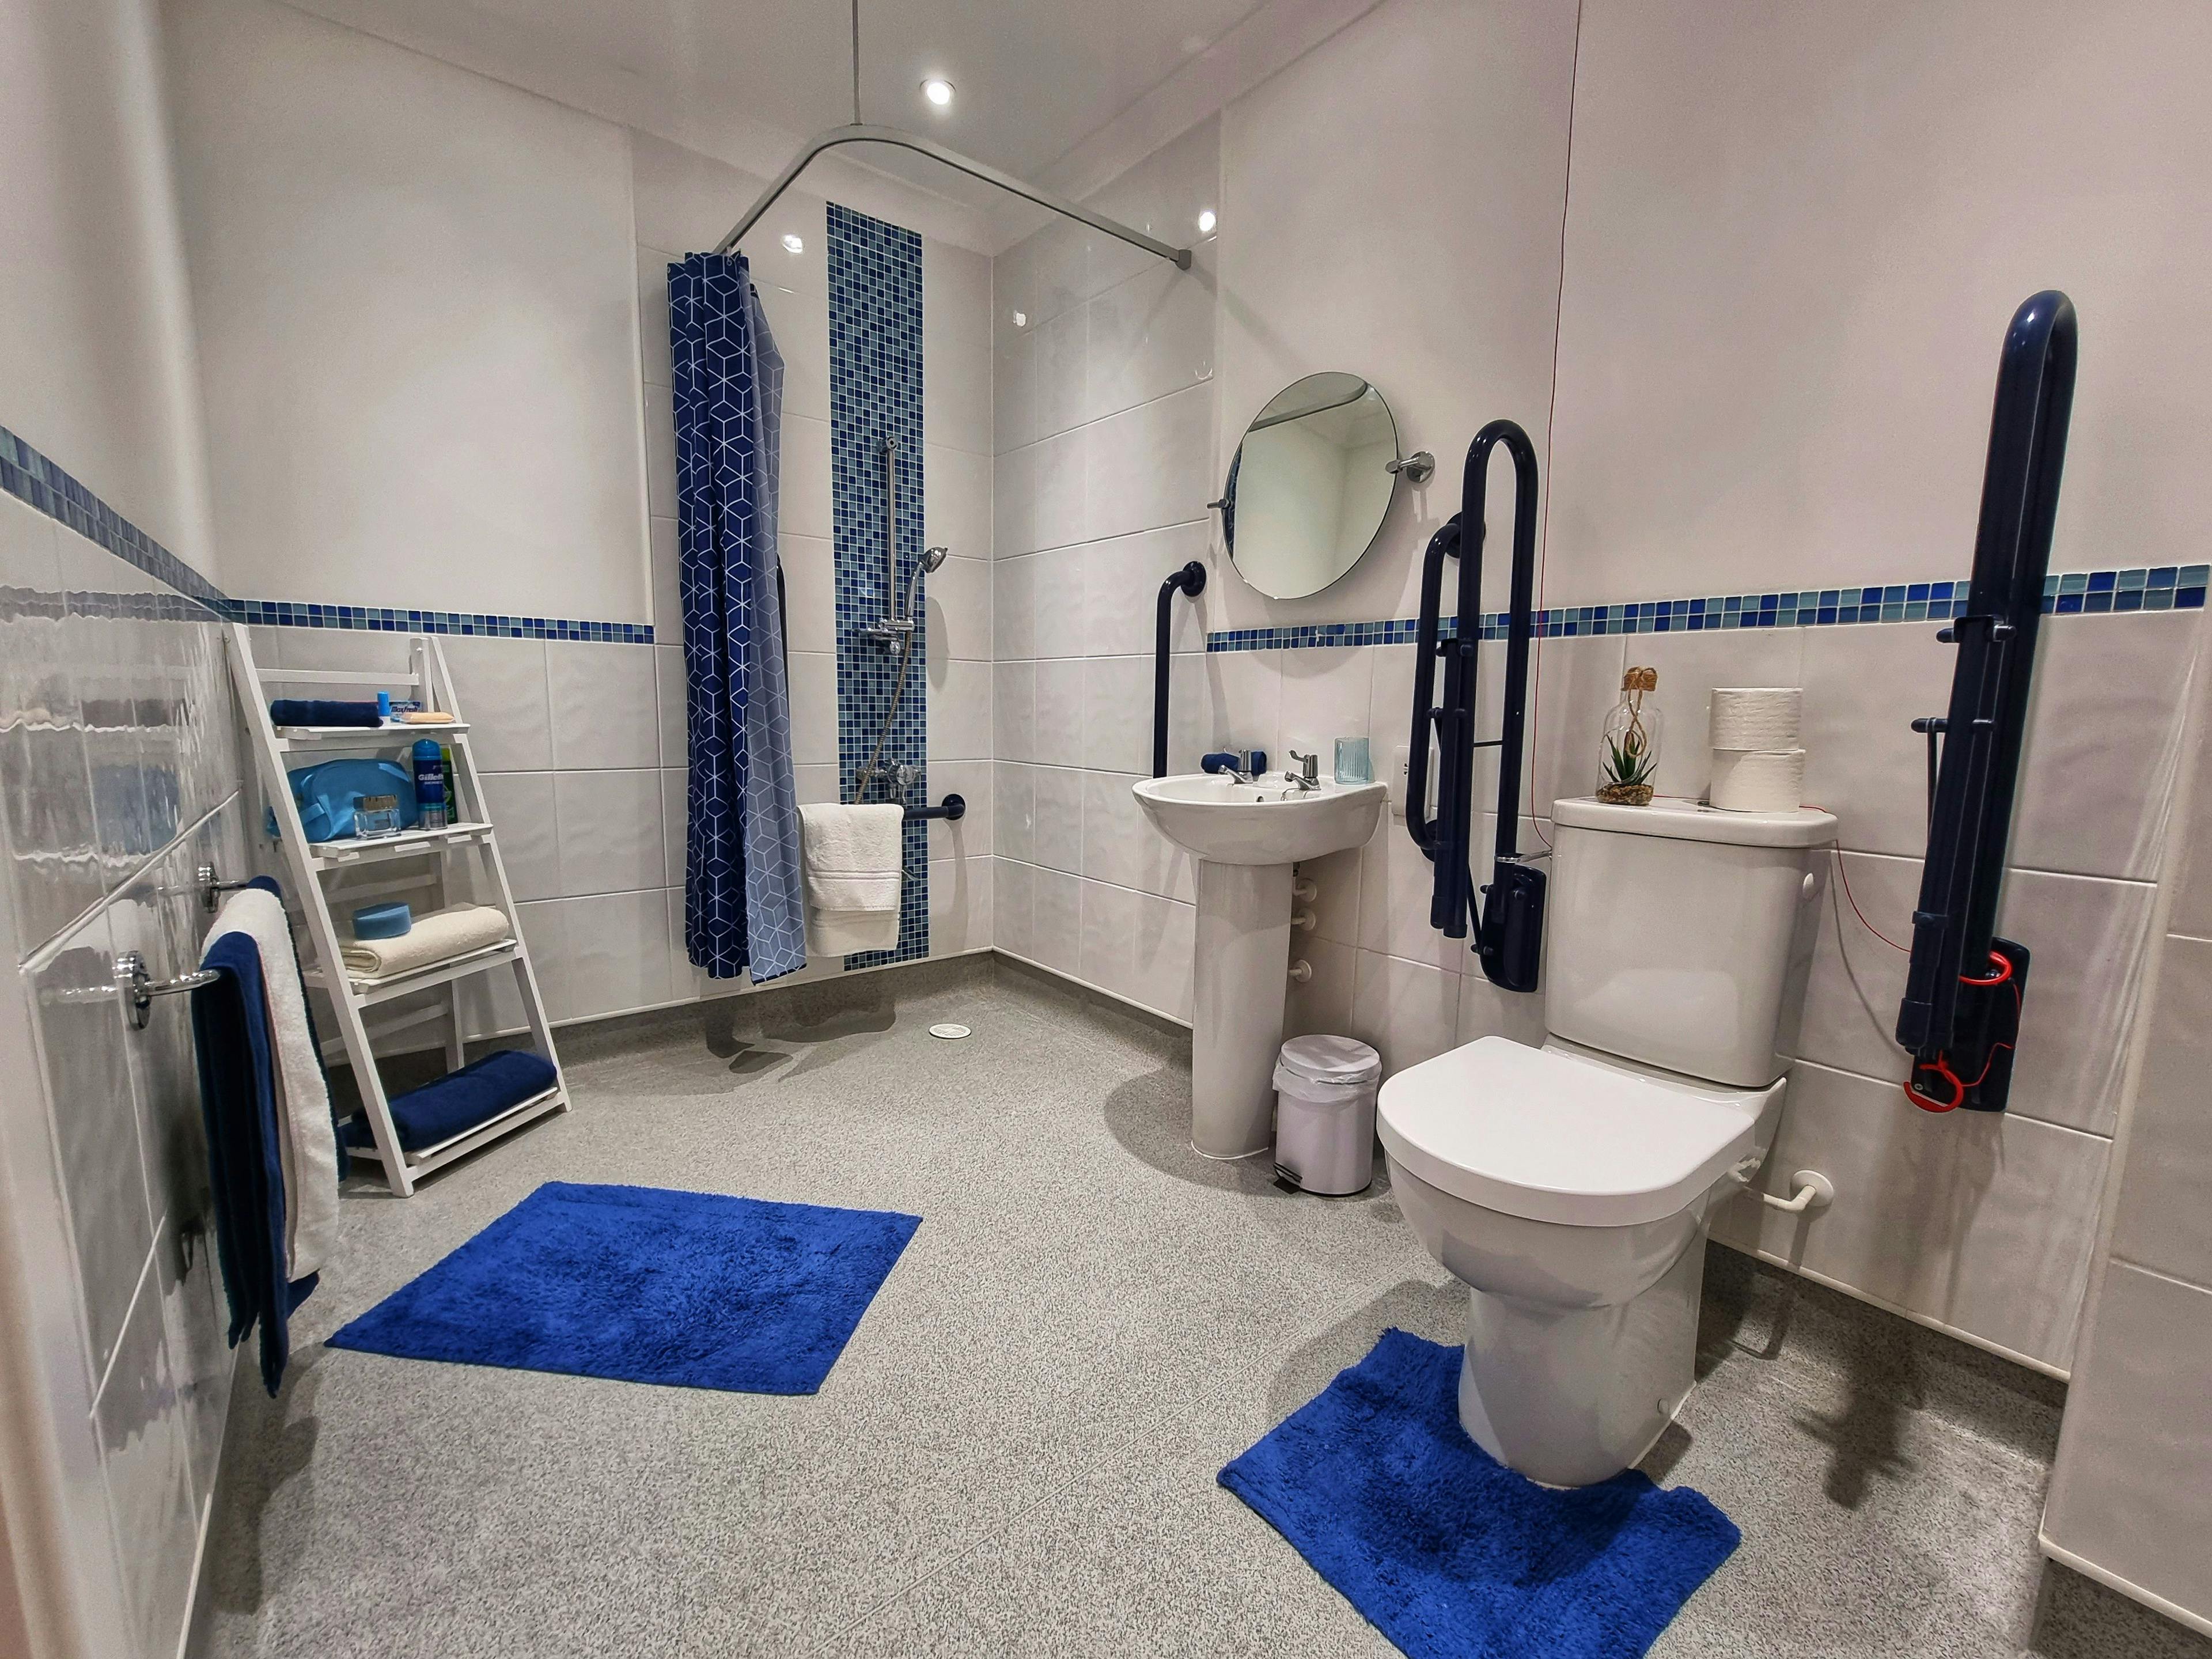 Bathroom of Lynwood care home in Ascot, Berkshire